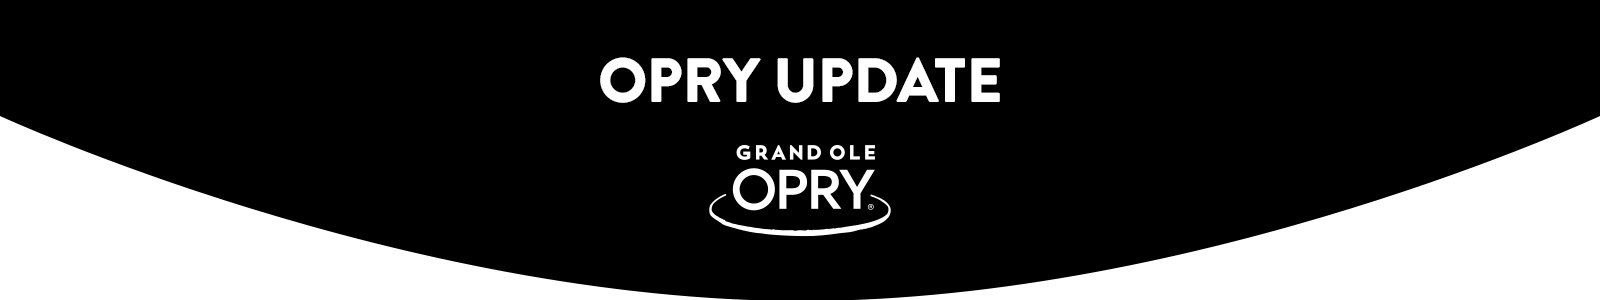 GRAND OLE OPRY - OPRY UPDATE